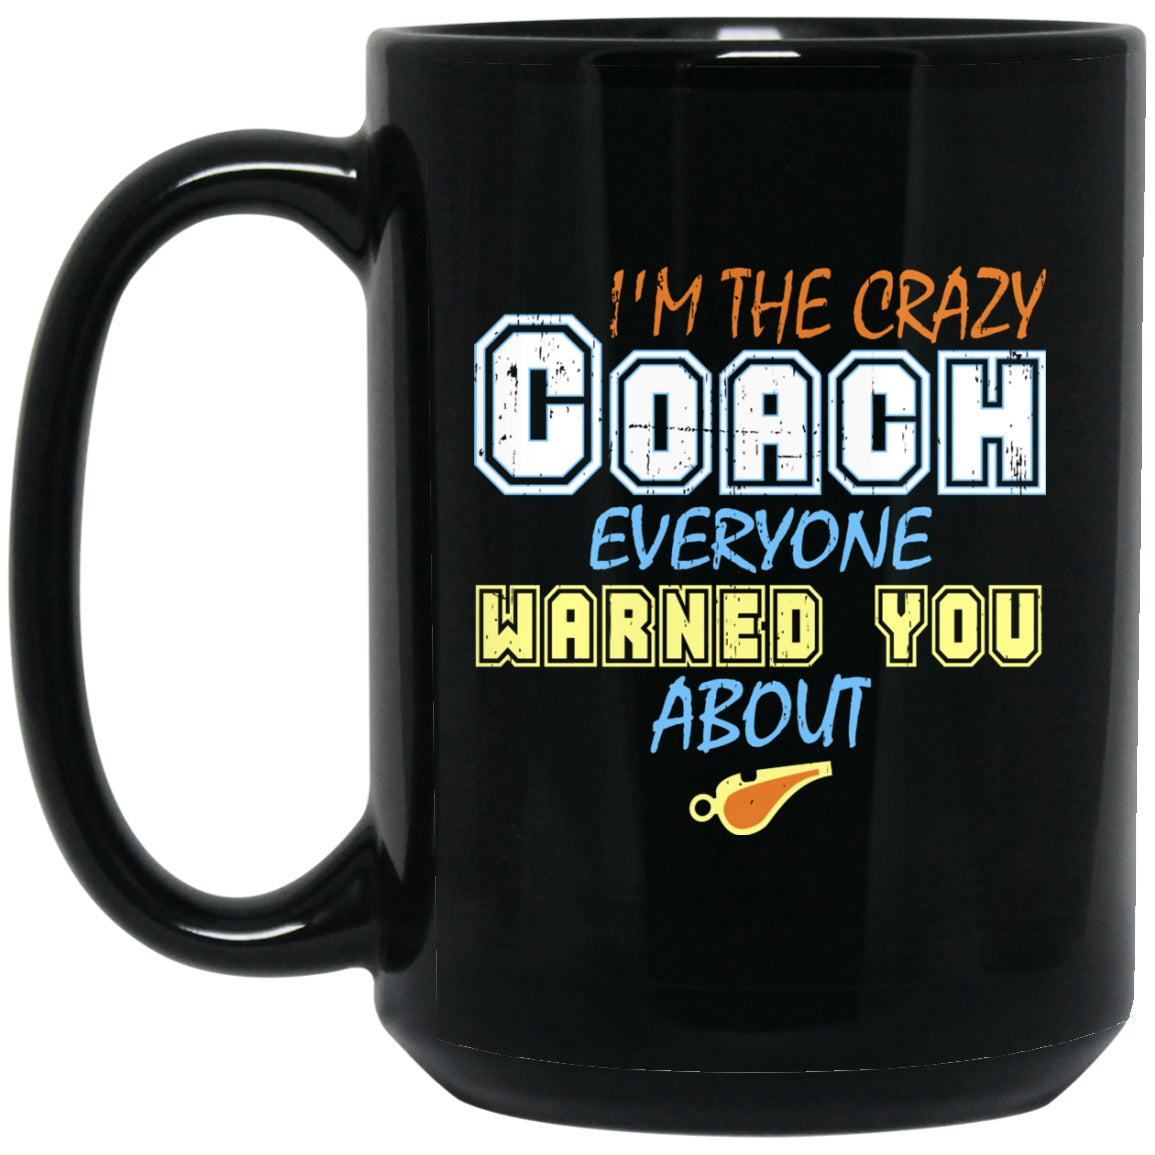 Coach Mug Funny Black Coffee Mugs - GoneBold.gift